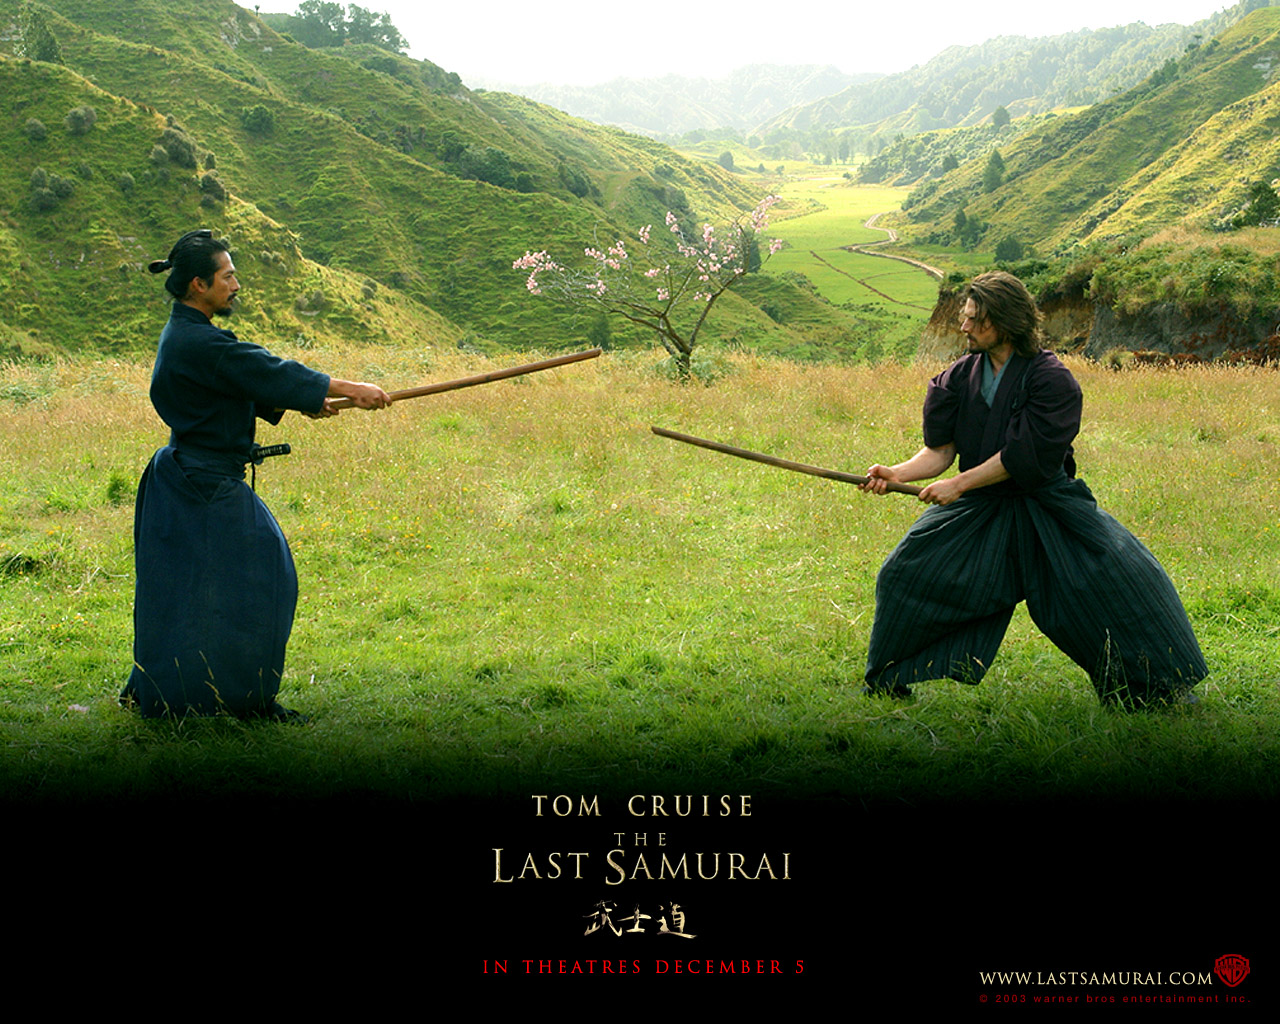 Download HQ The Last Samurai wallpaper / Movies / 1280x1024